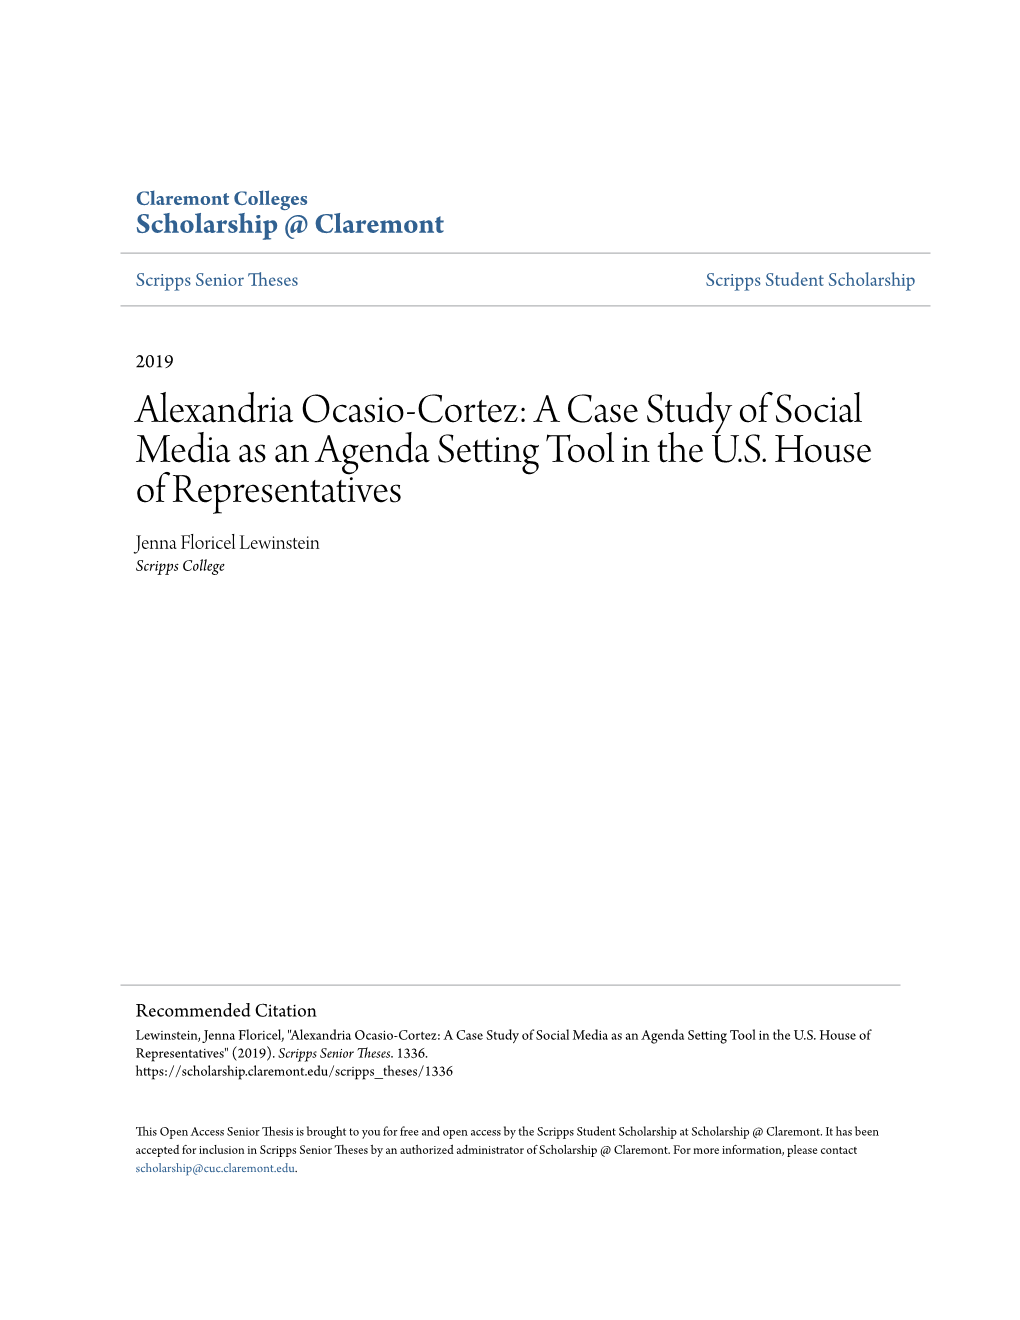 Alexandria Ocasio-Cortez: a Case Study of Social Media As an Agenda Setting Tool in the U.S